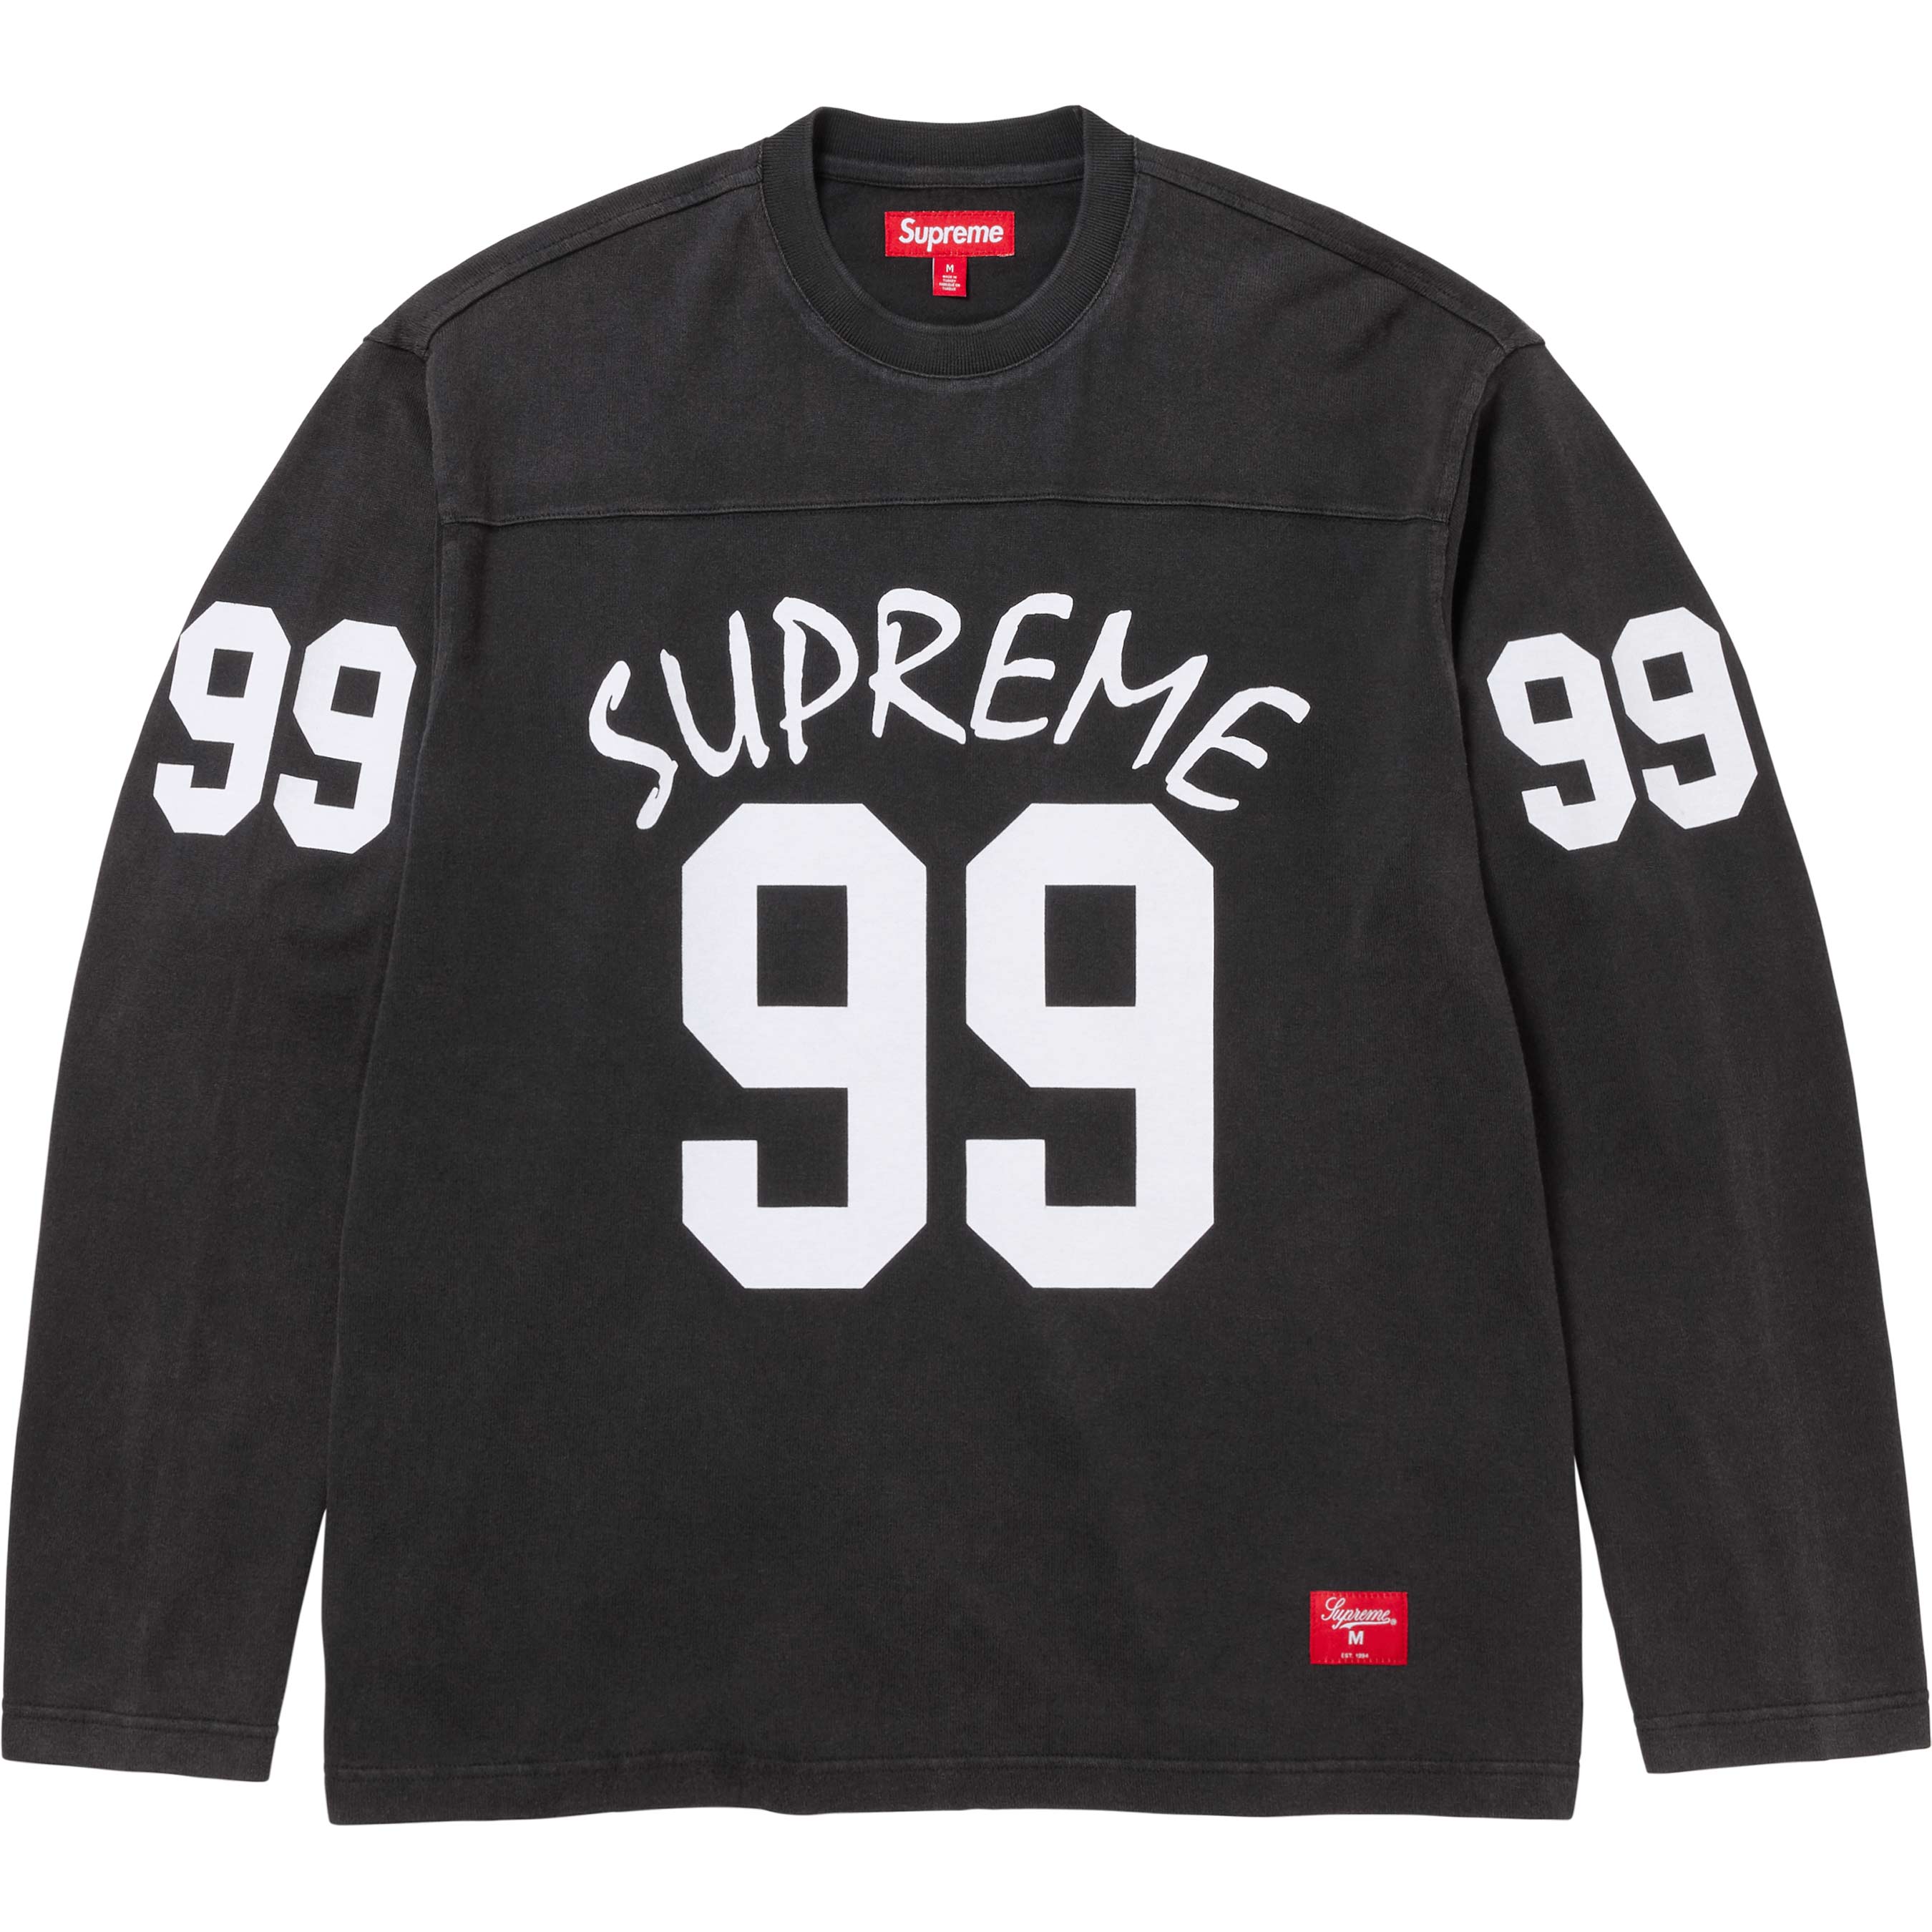 Supreme 99 L S Football Top black 24ss - シャツ